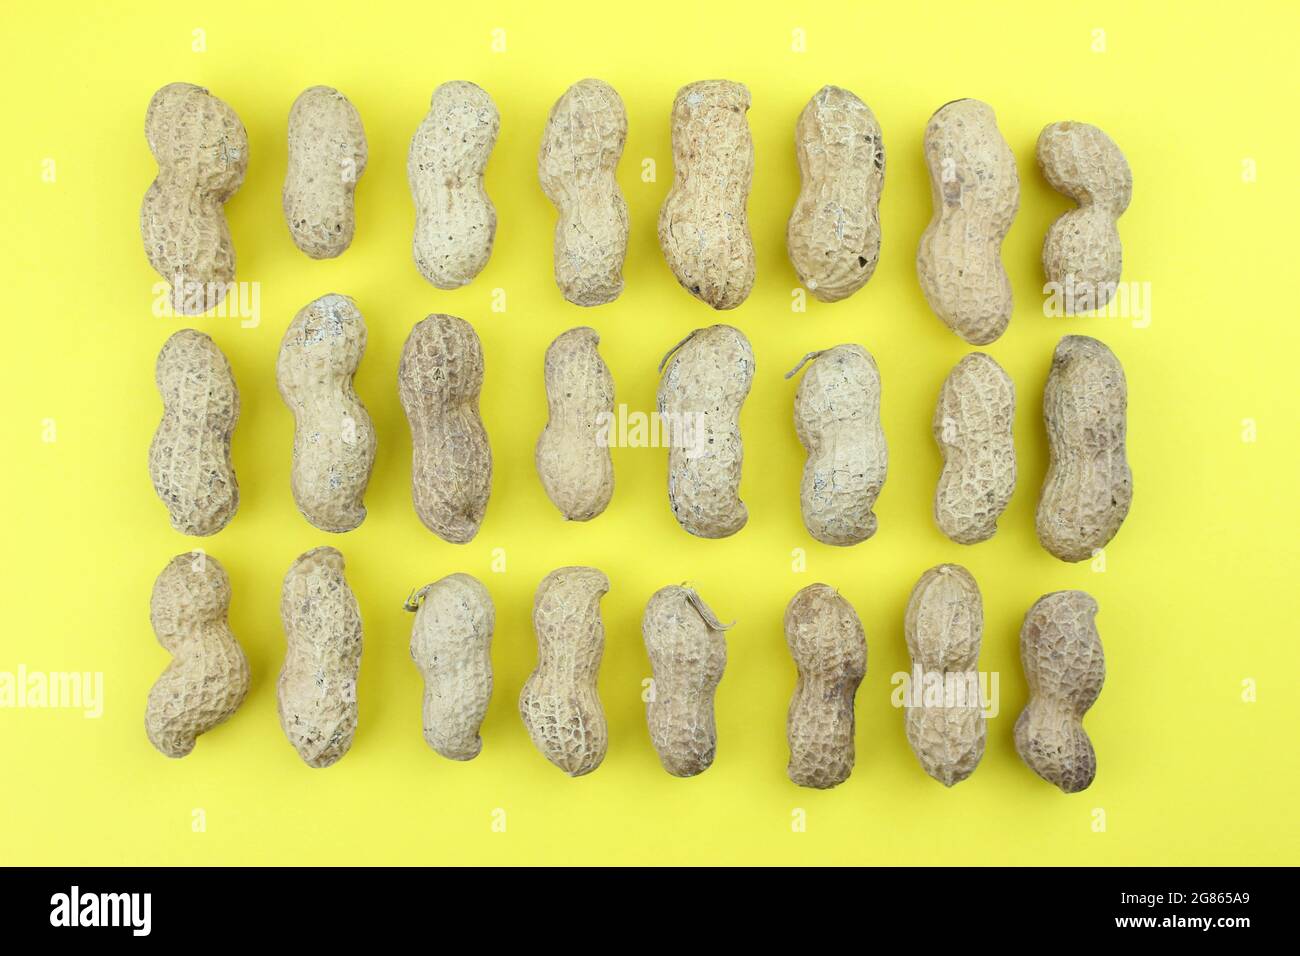 Peanuts Group of Arachis hypogaea on the yellow background Stock Photo